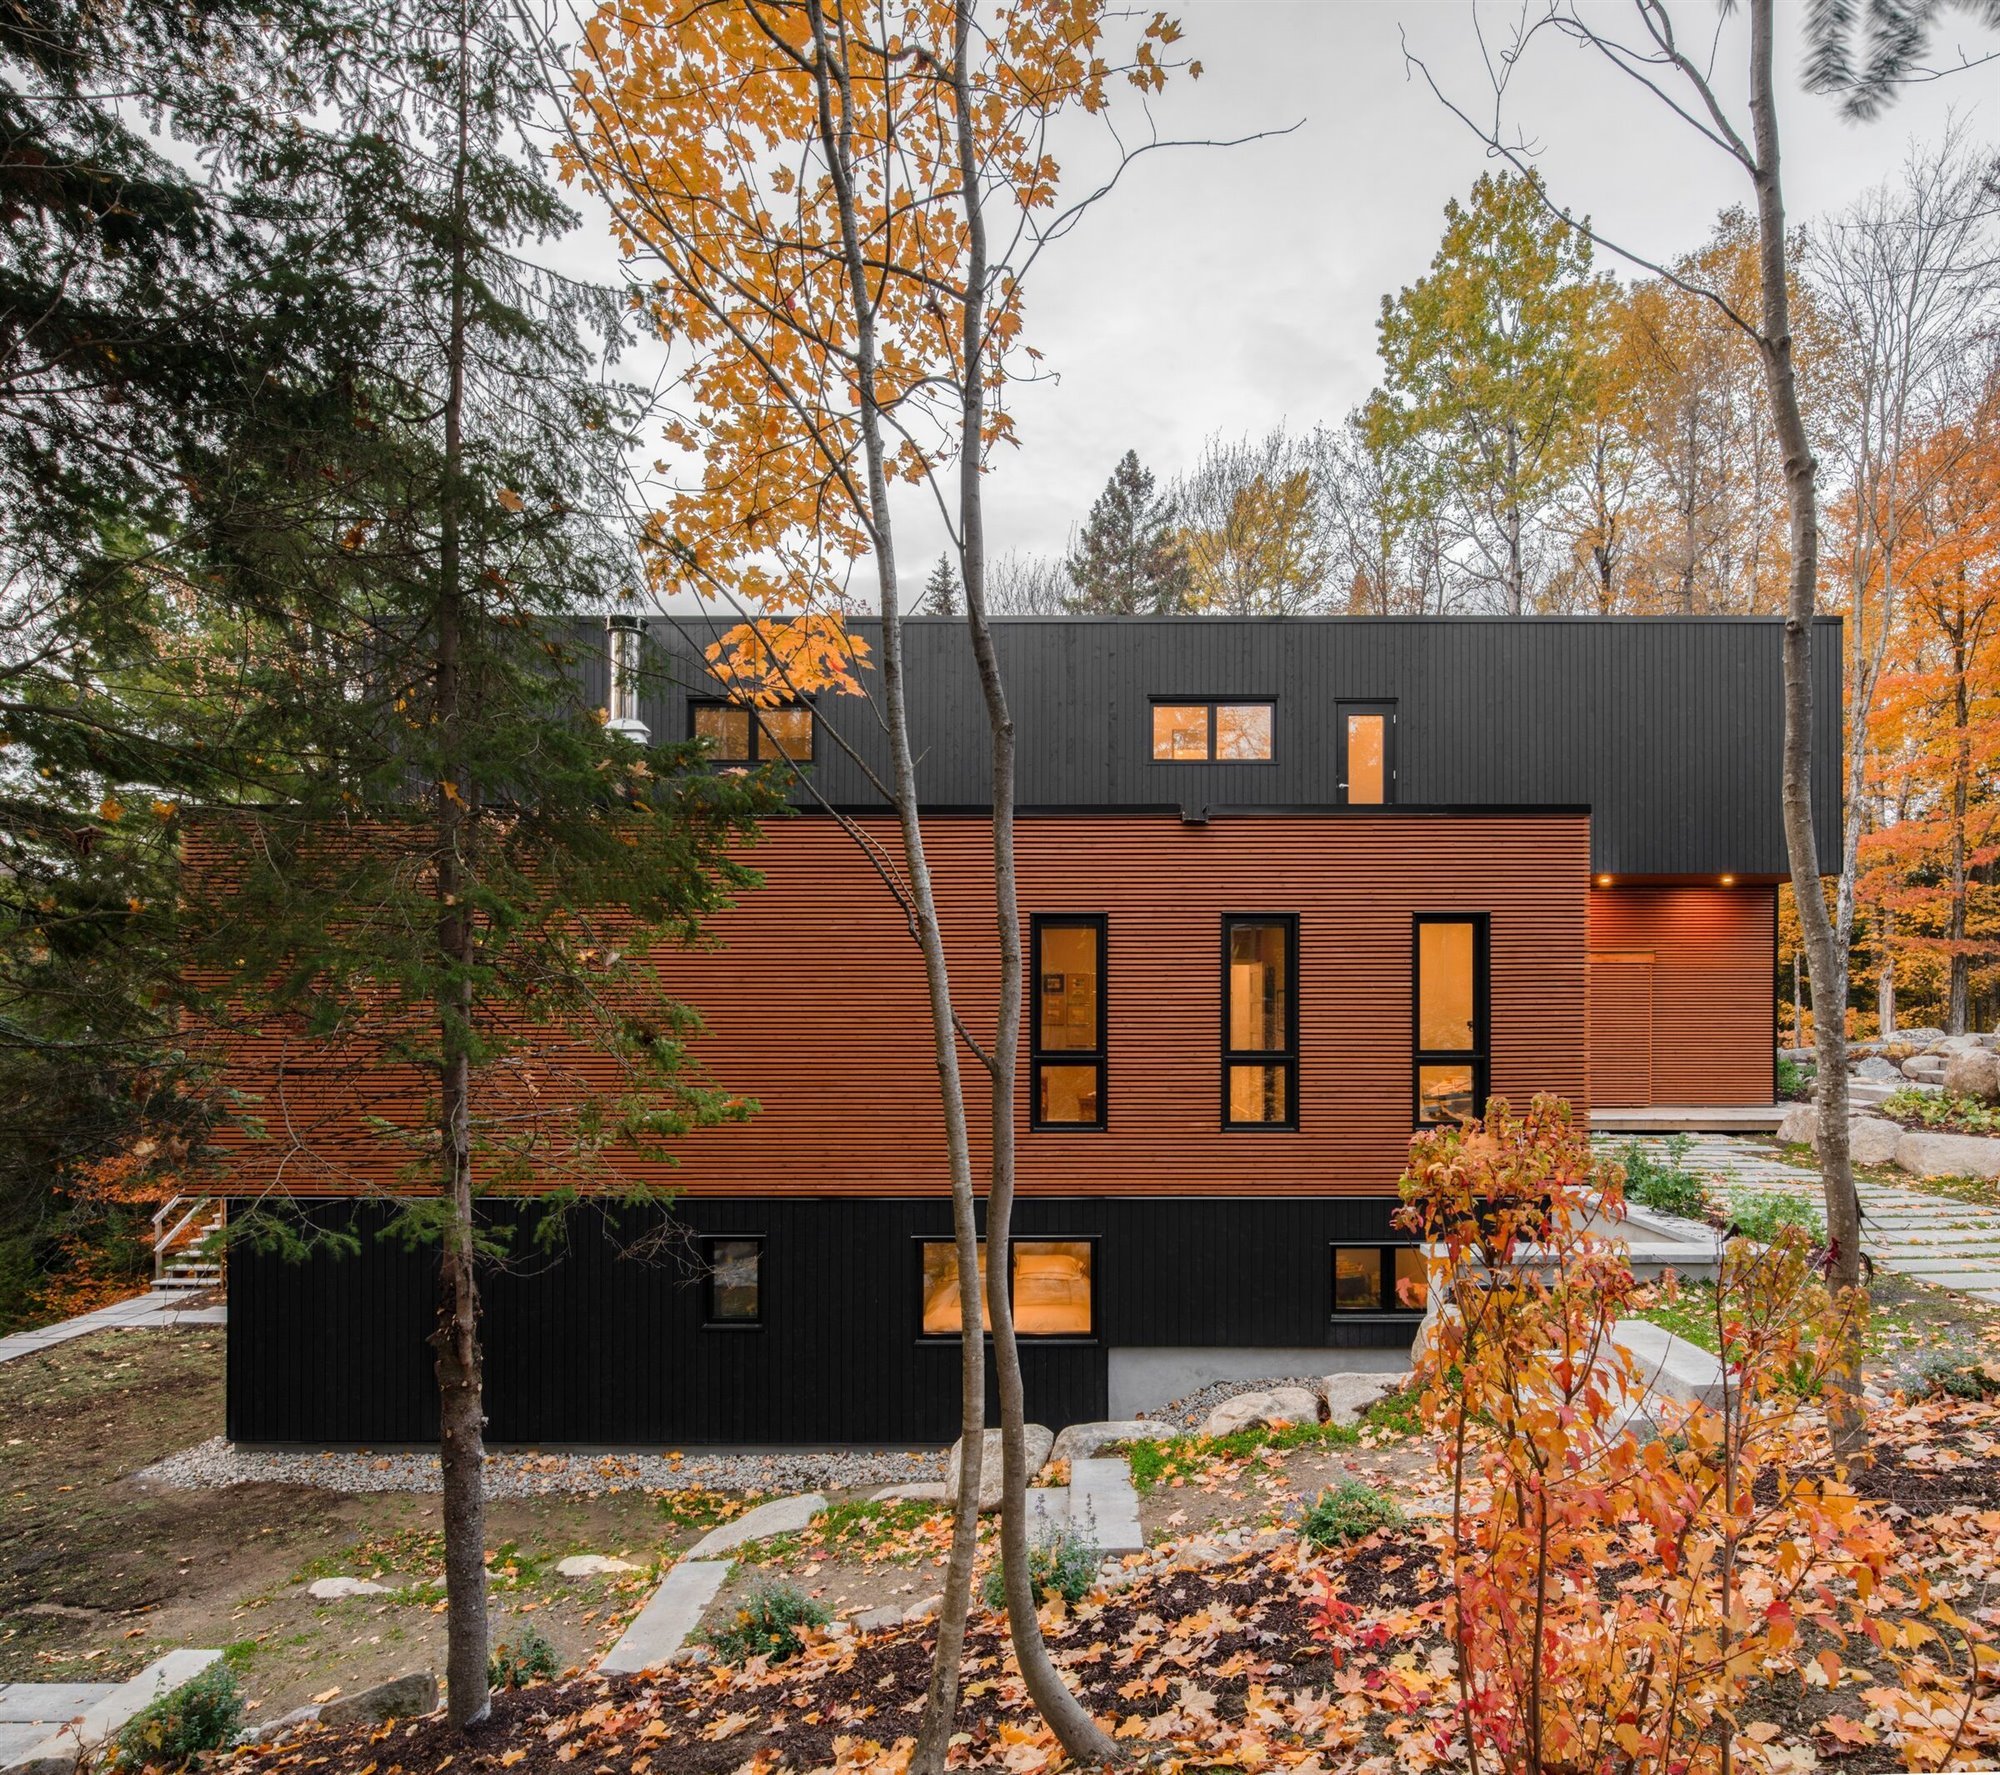 Casa prefabricada en Canada hecha con fachada de madera en dos colores